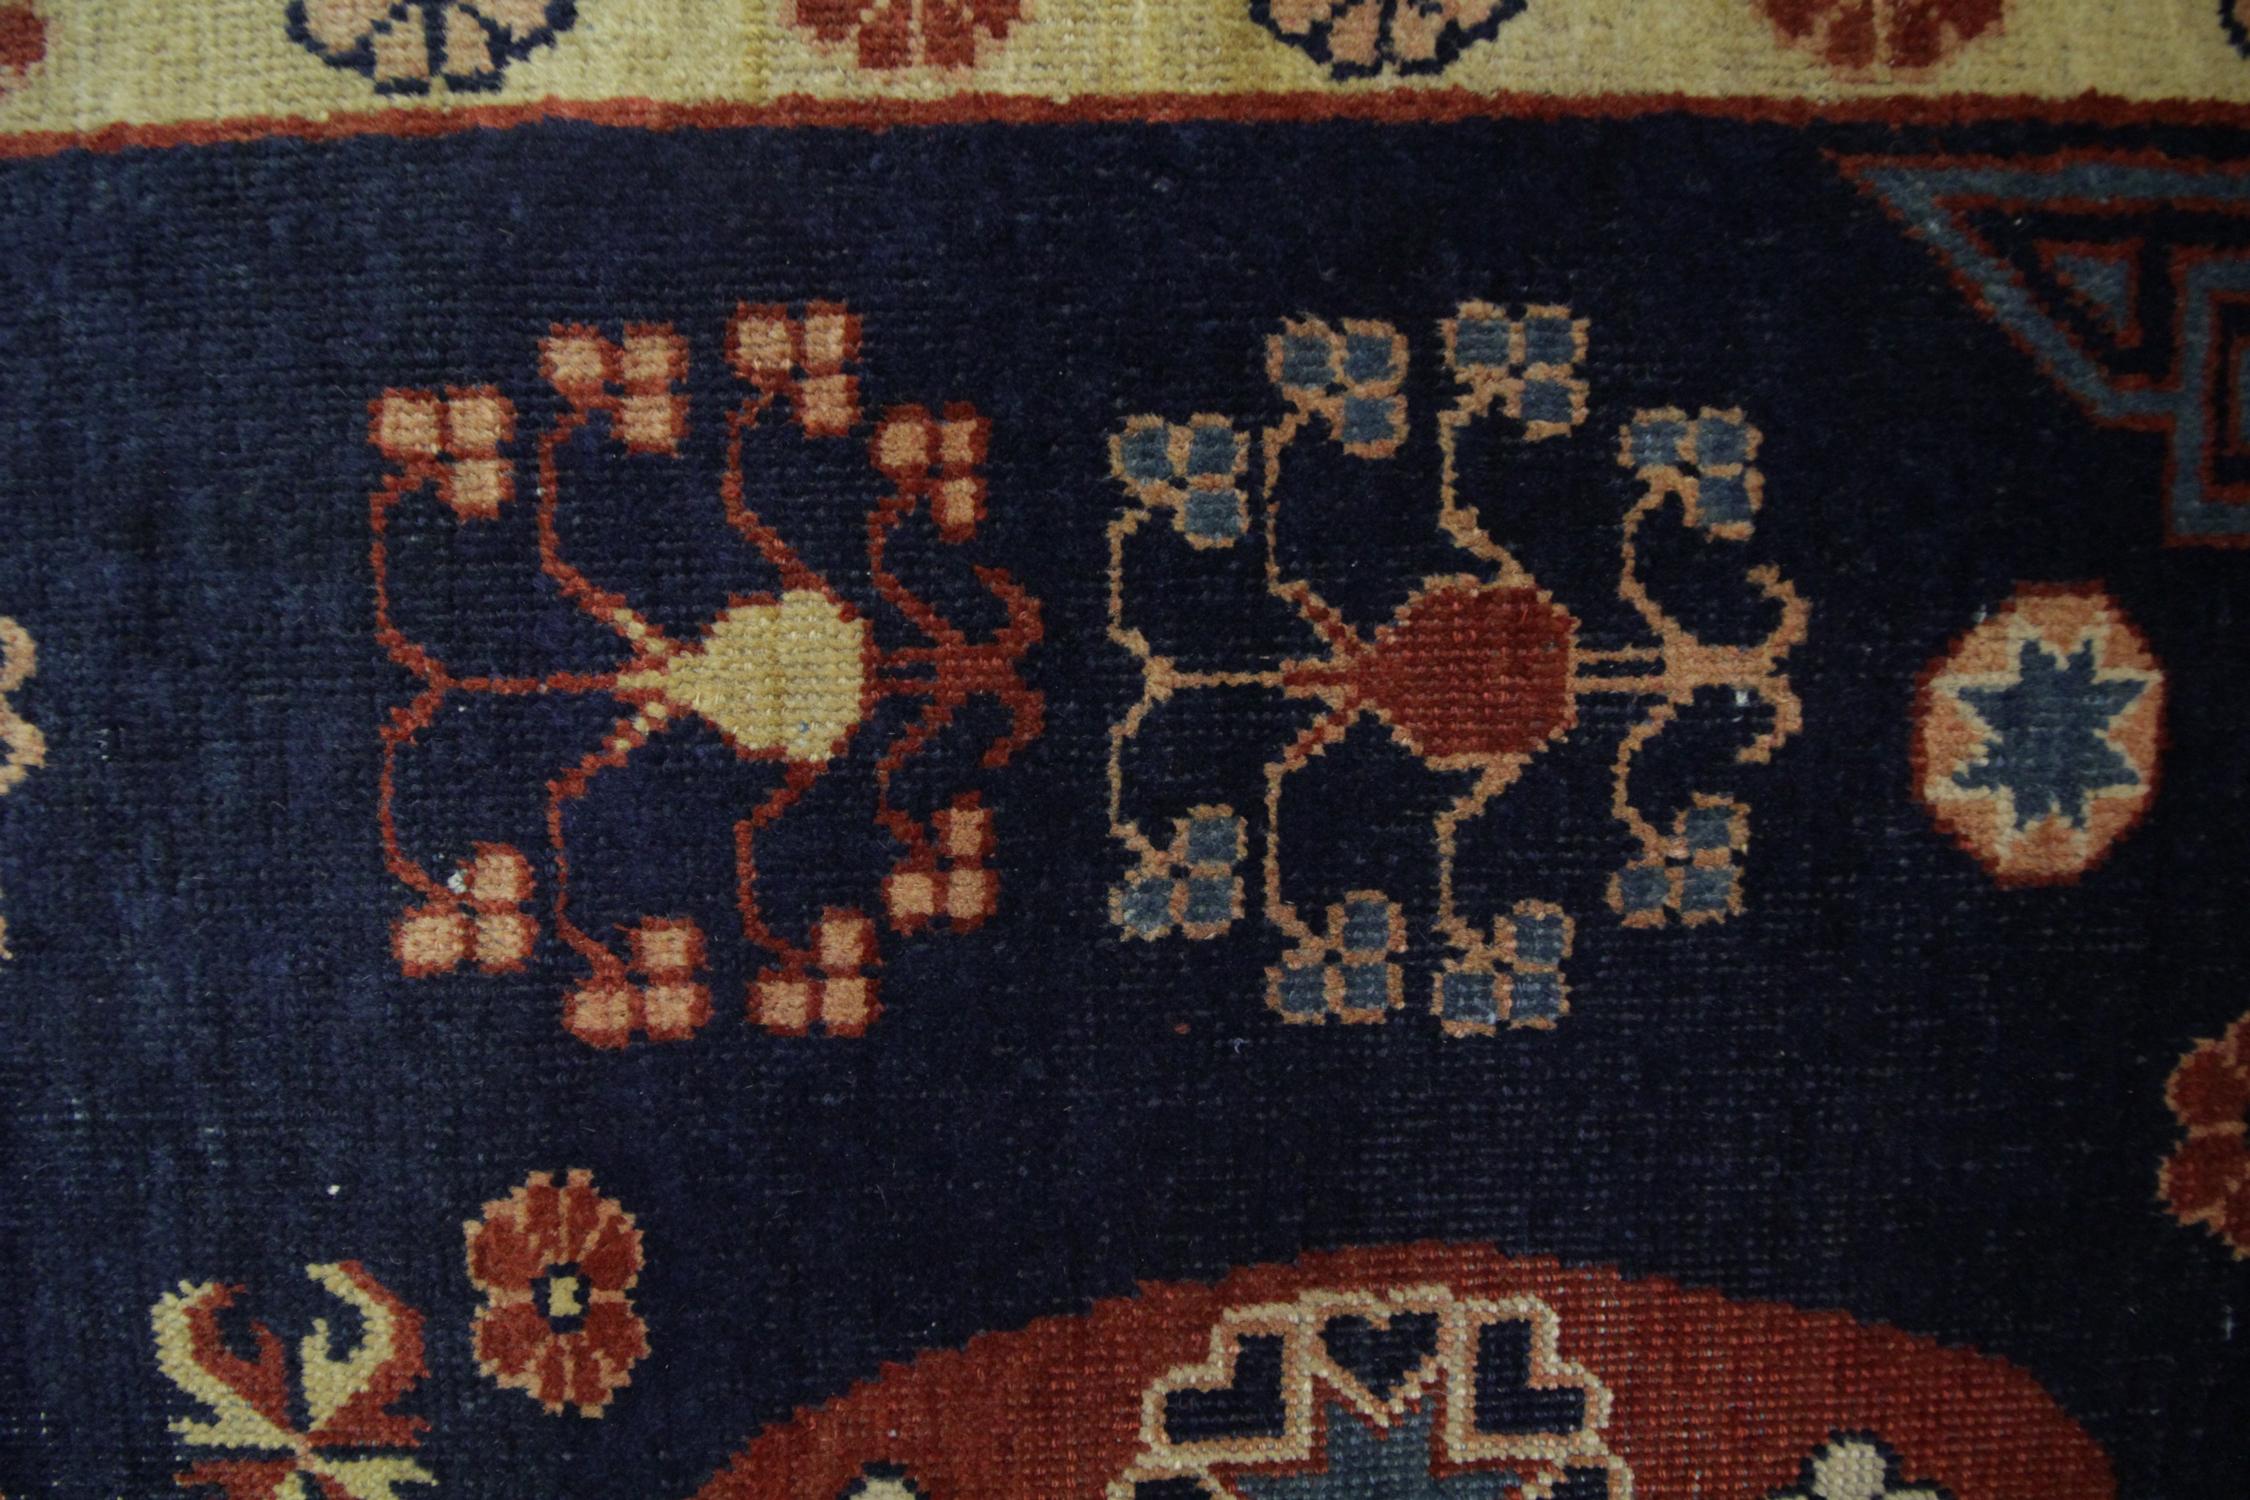 19th Century Khotan Antique Rug, Handmade Carpet Oriental Wool Living Room Rugs for Sale For Sale